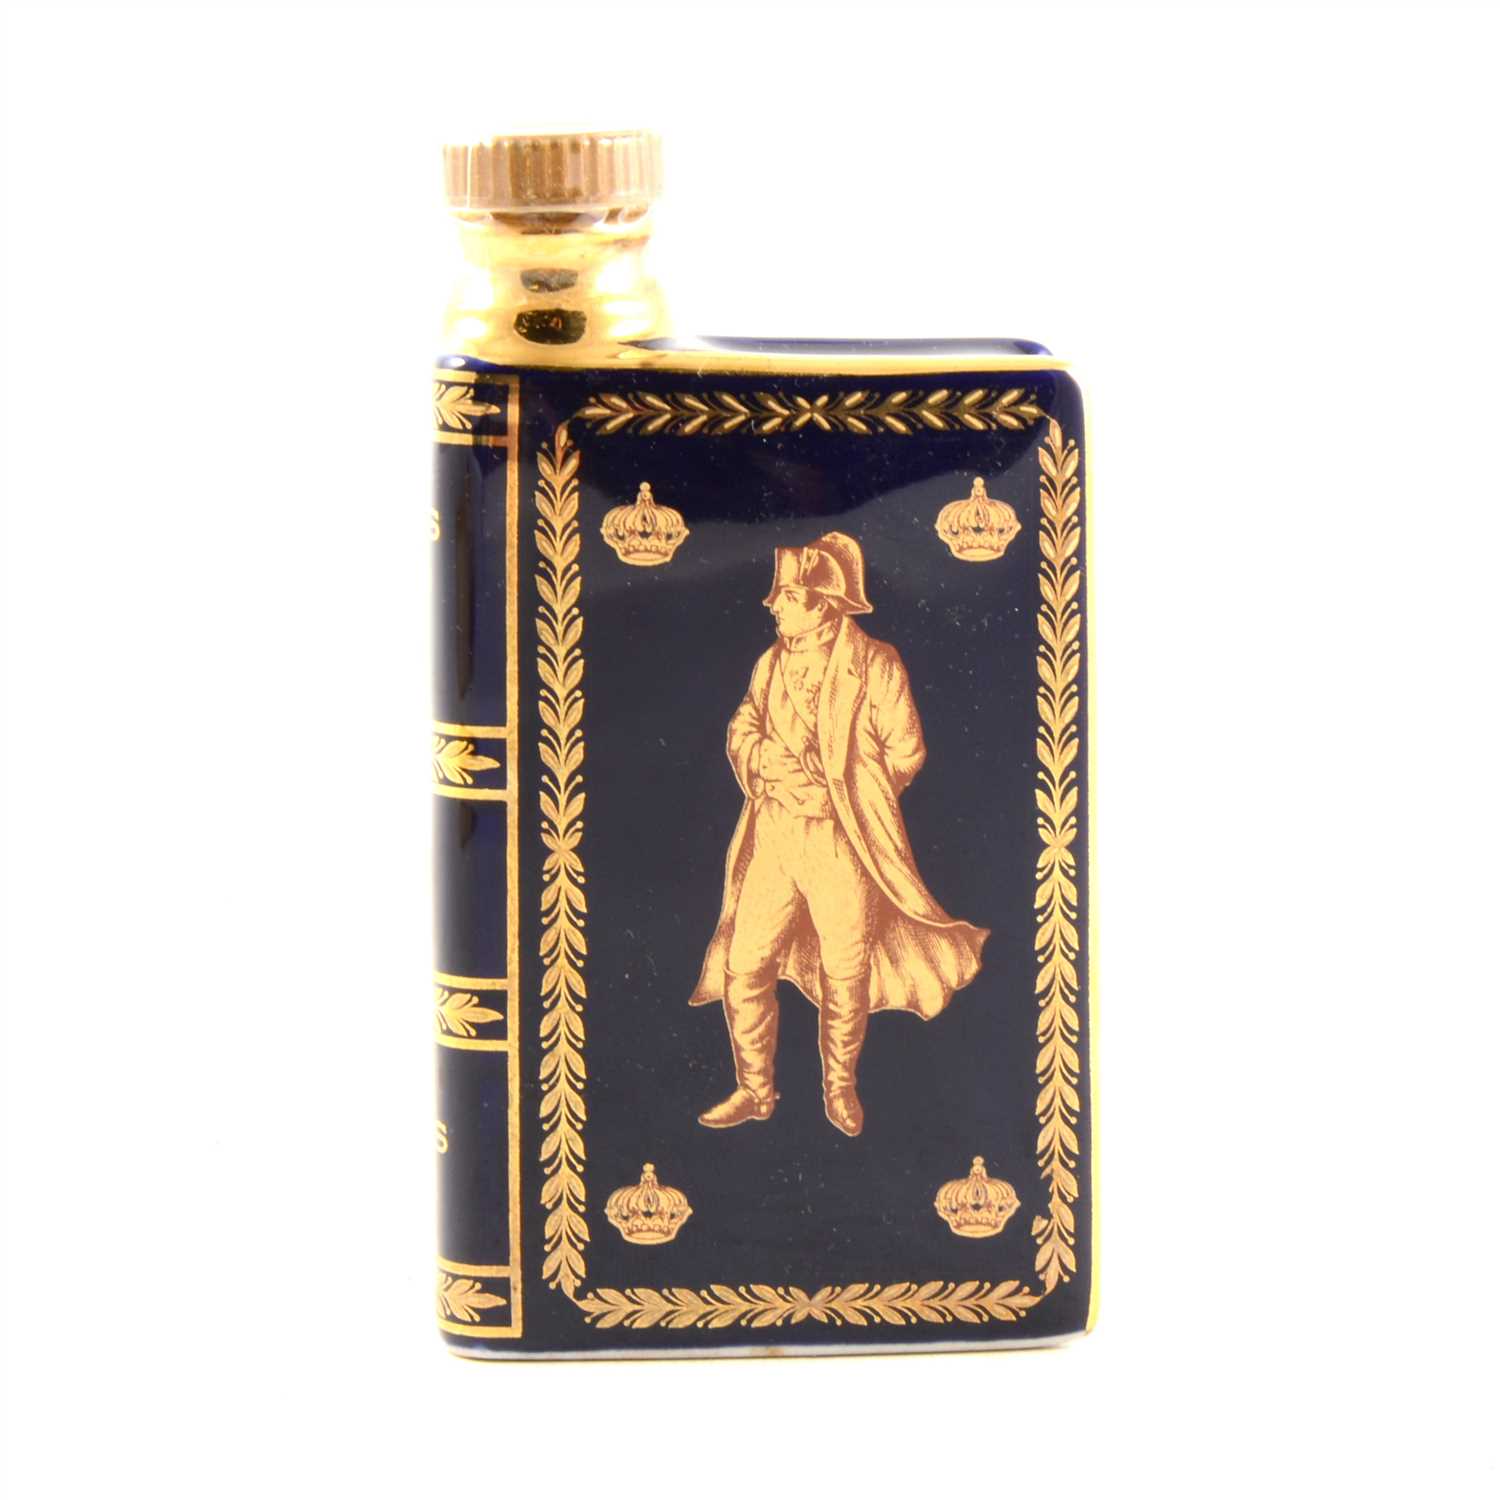 Lot 144 Cognac Camus Napoleon Limited Edition